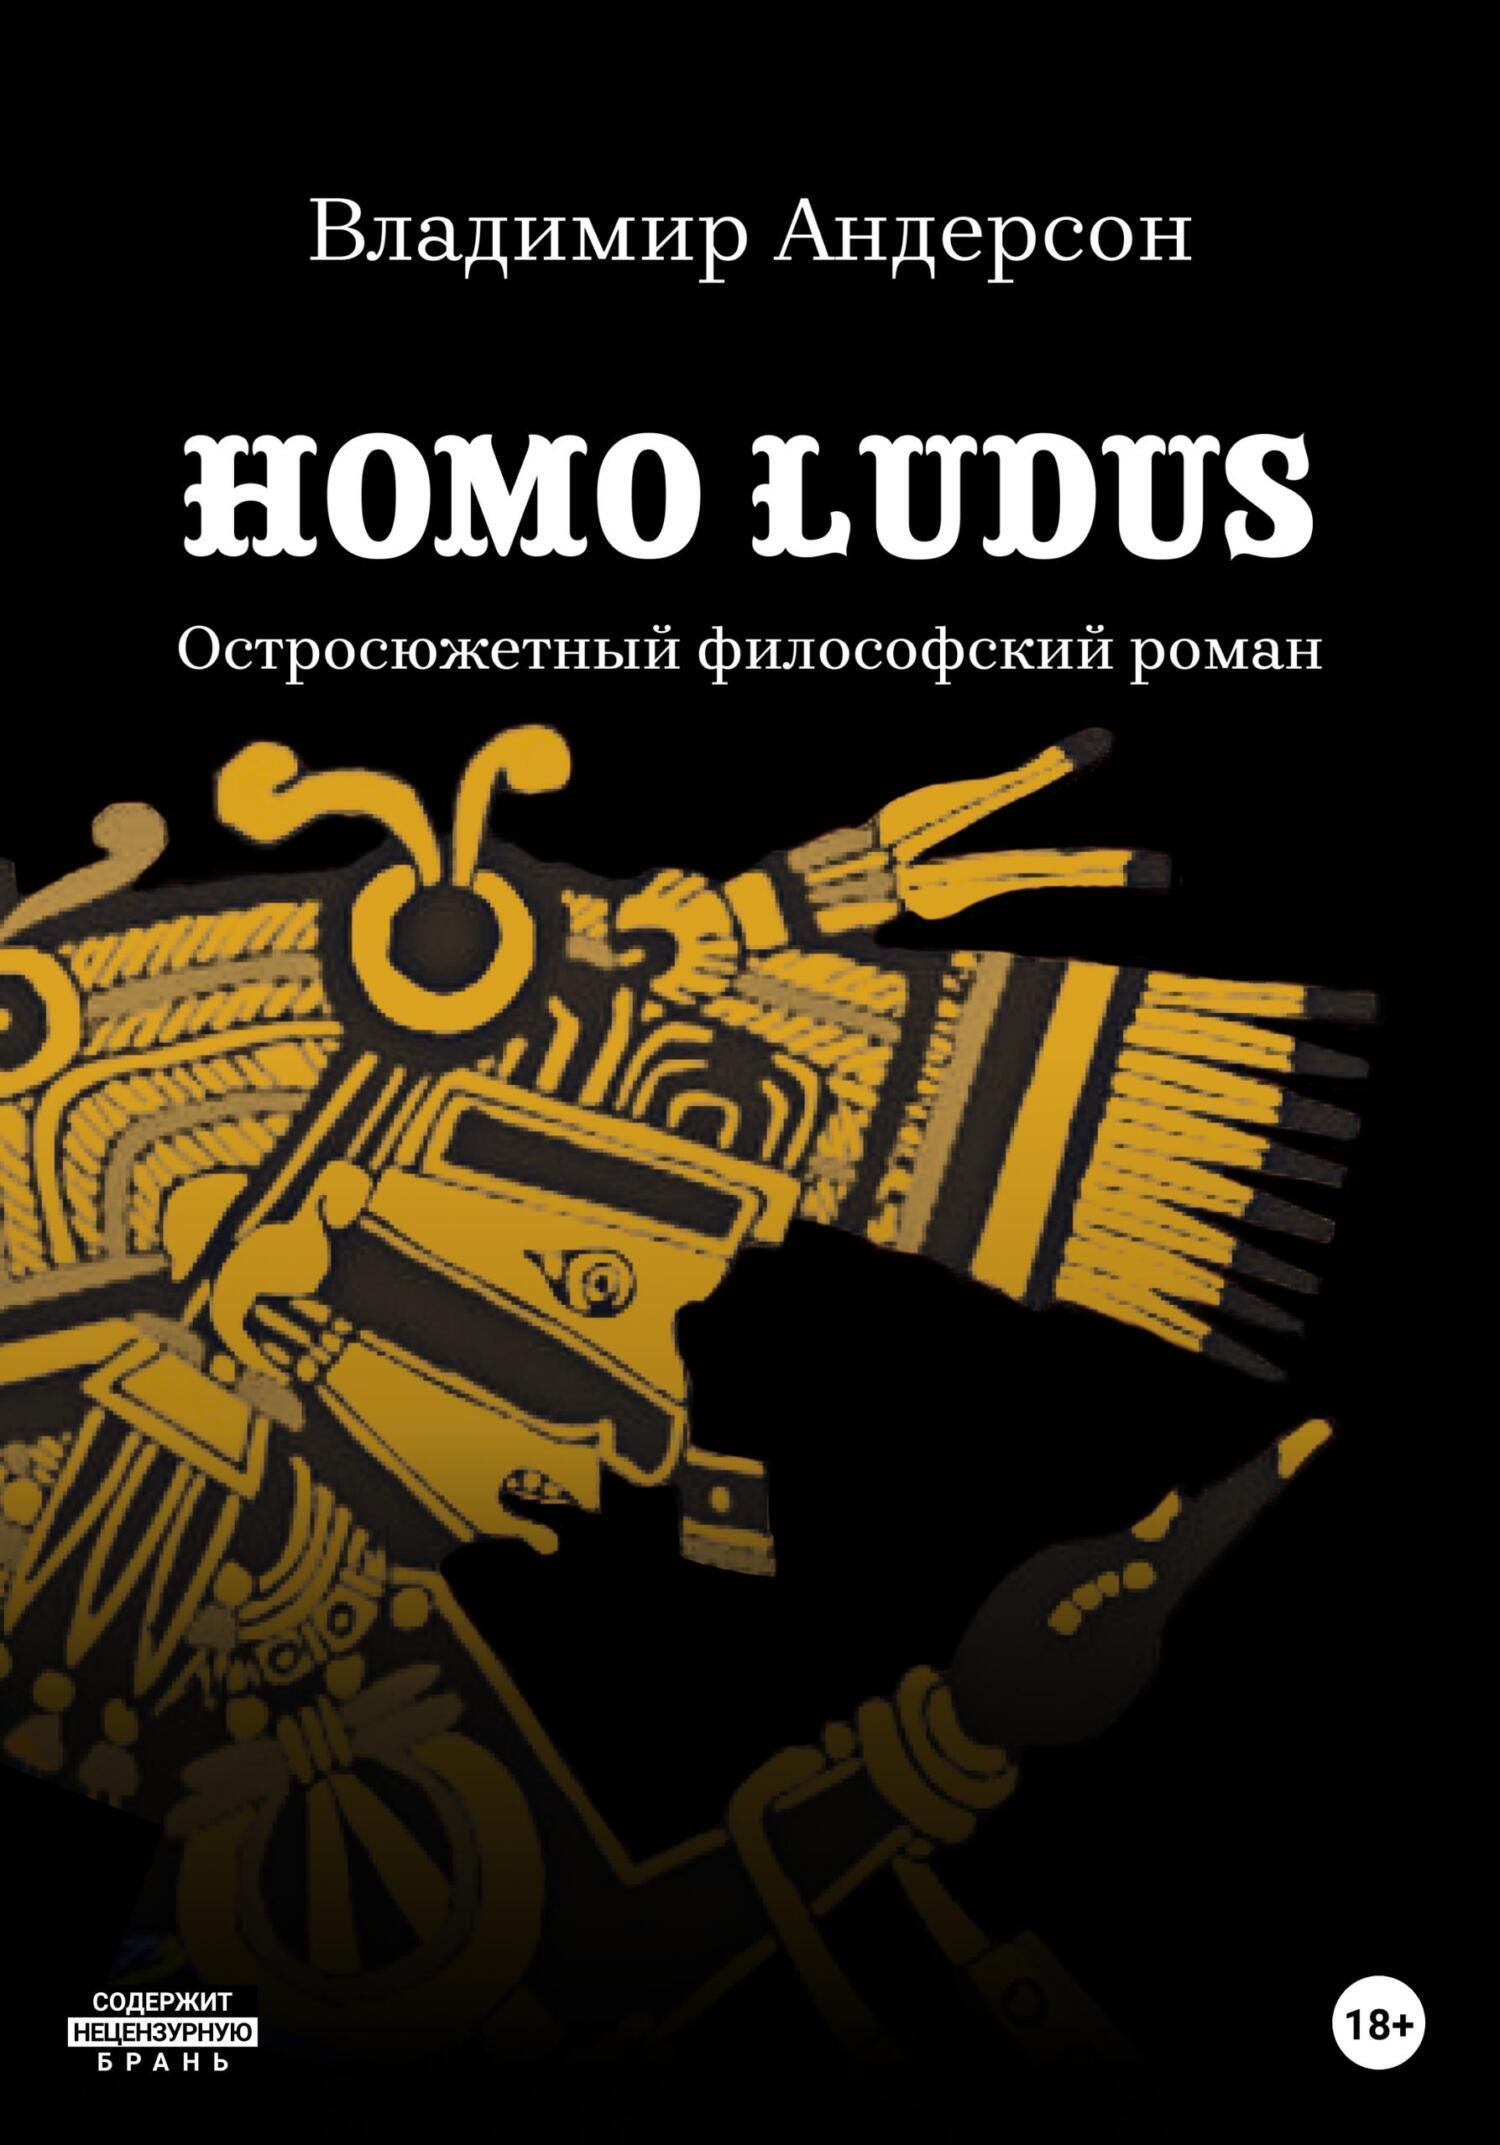 Homo ludus